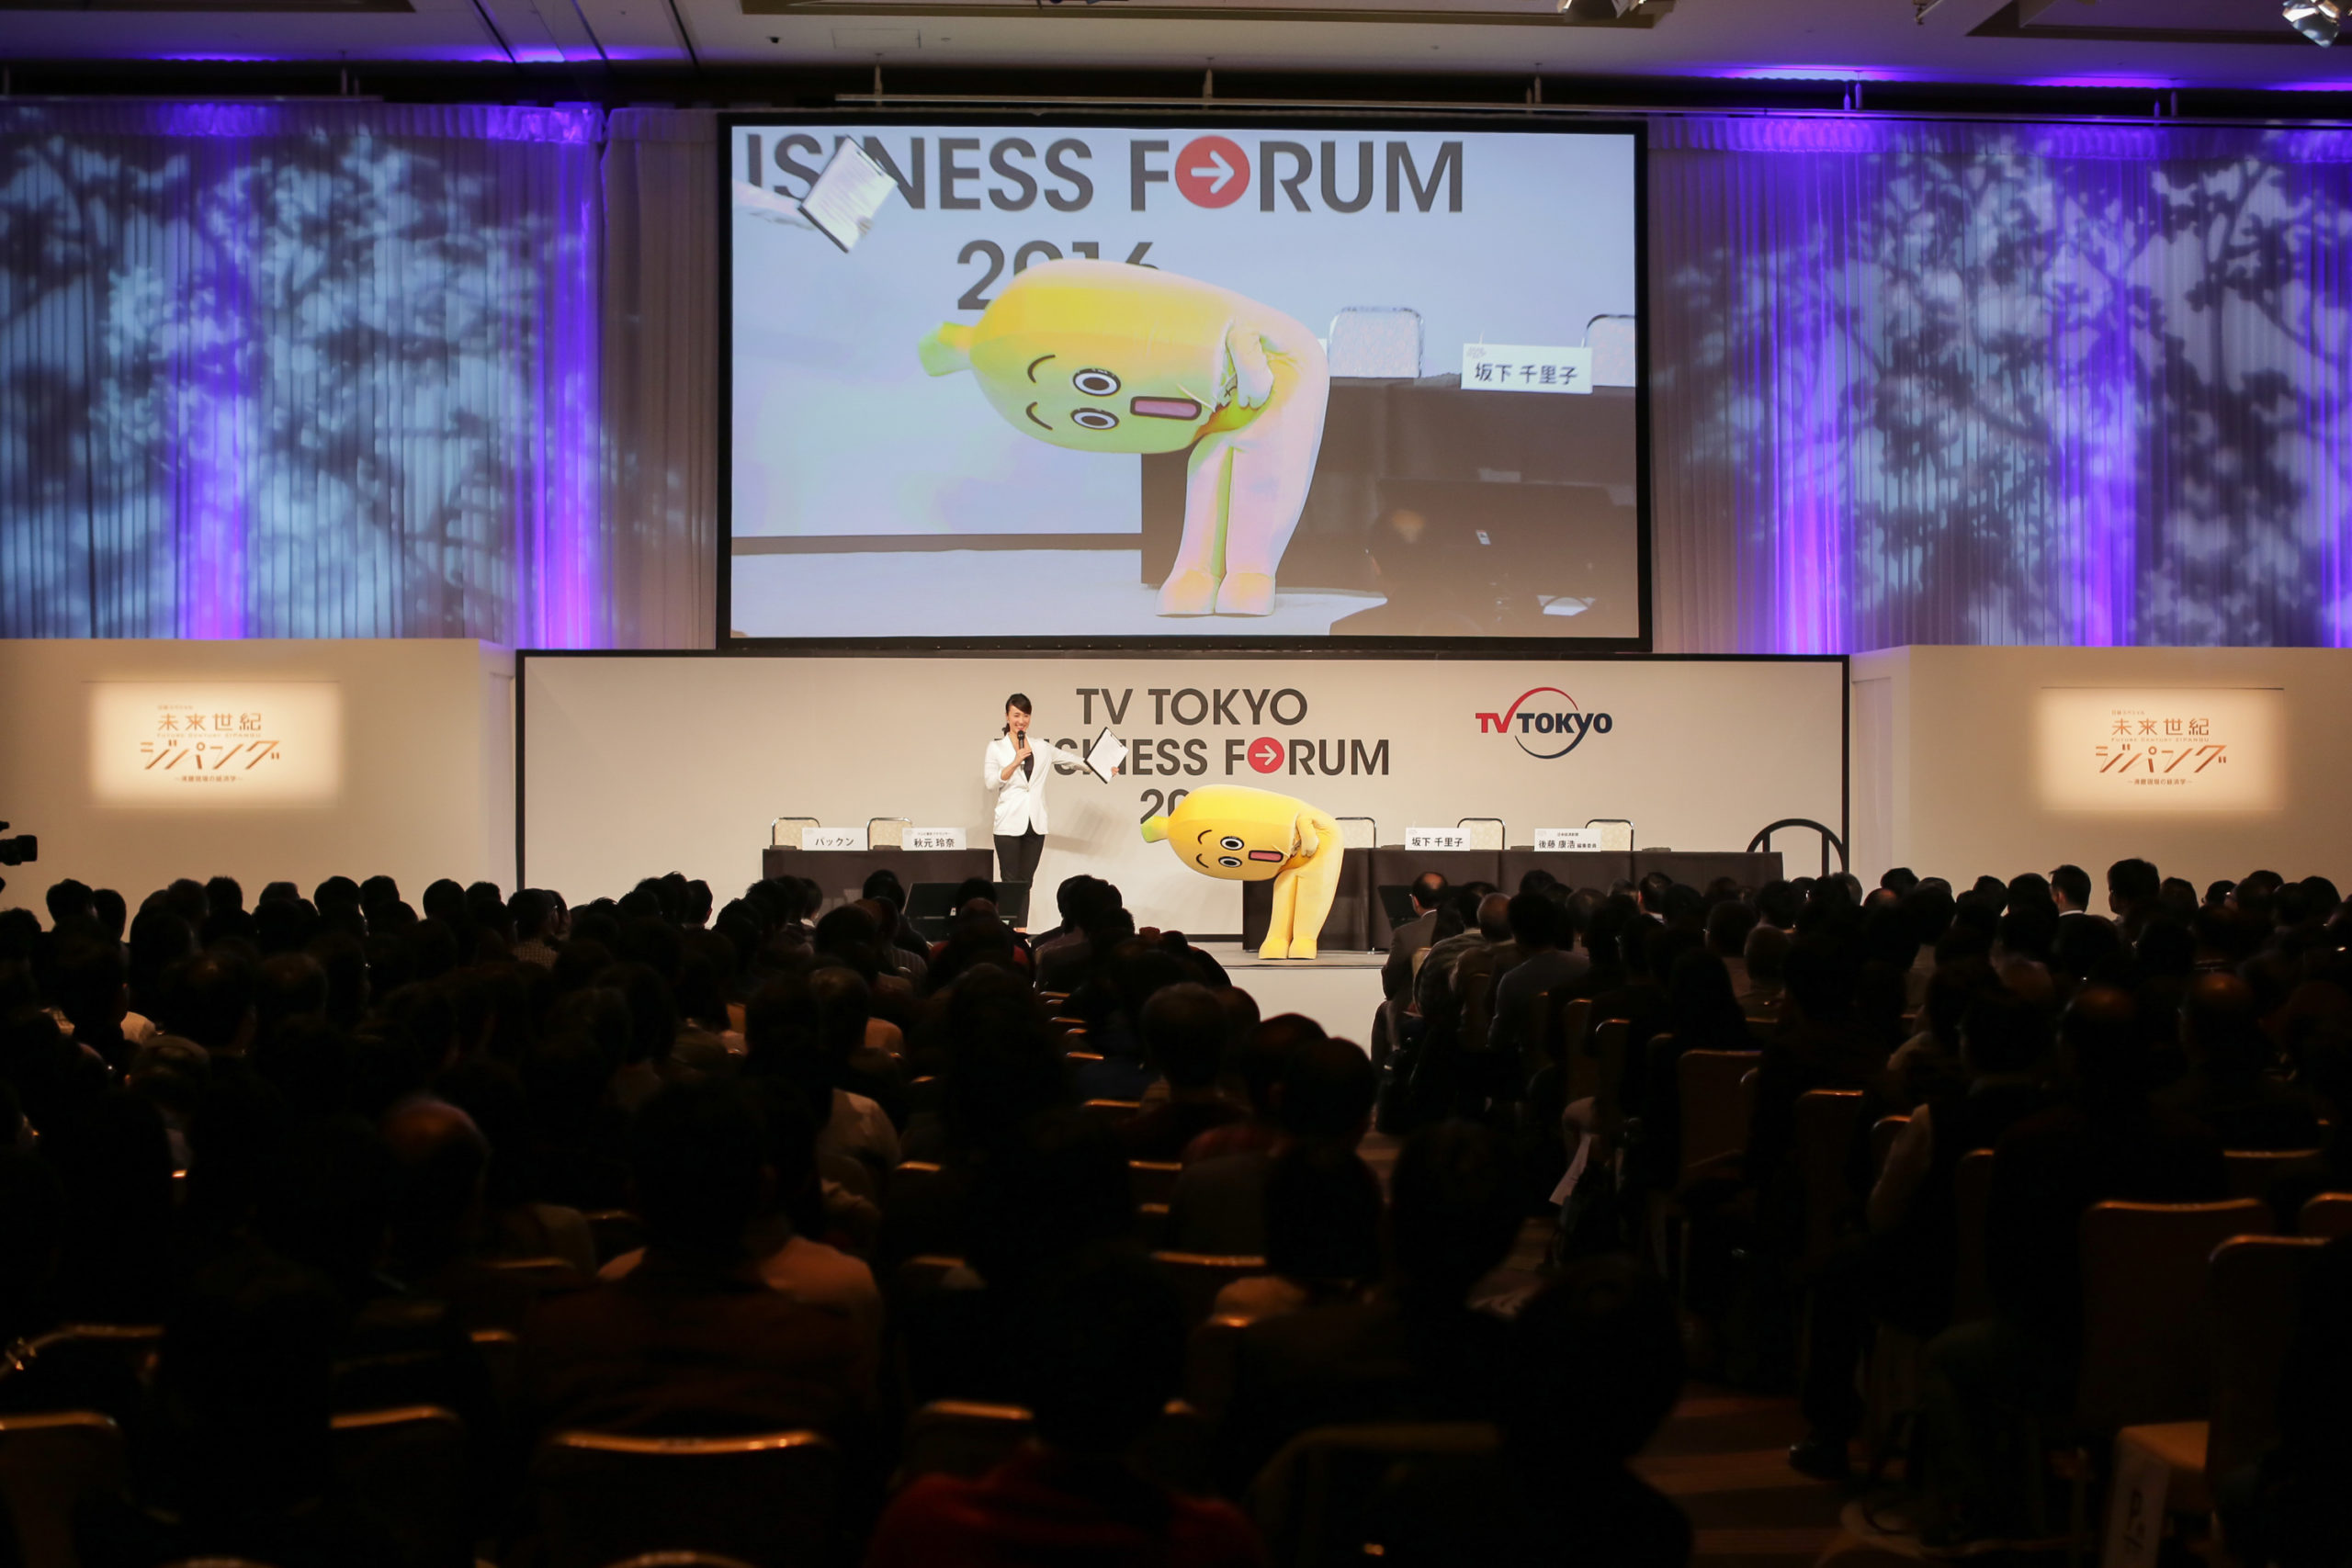 TV TOKYO Business forum 2016